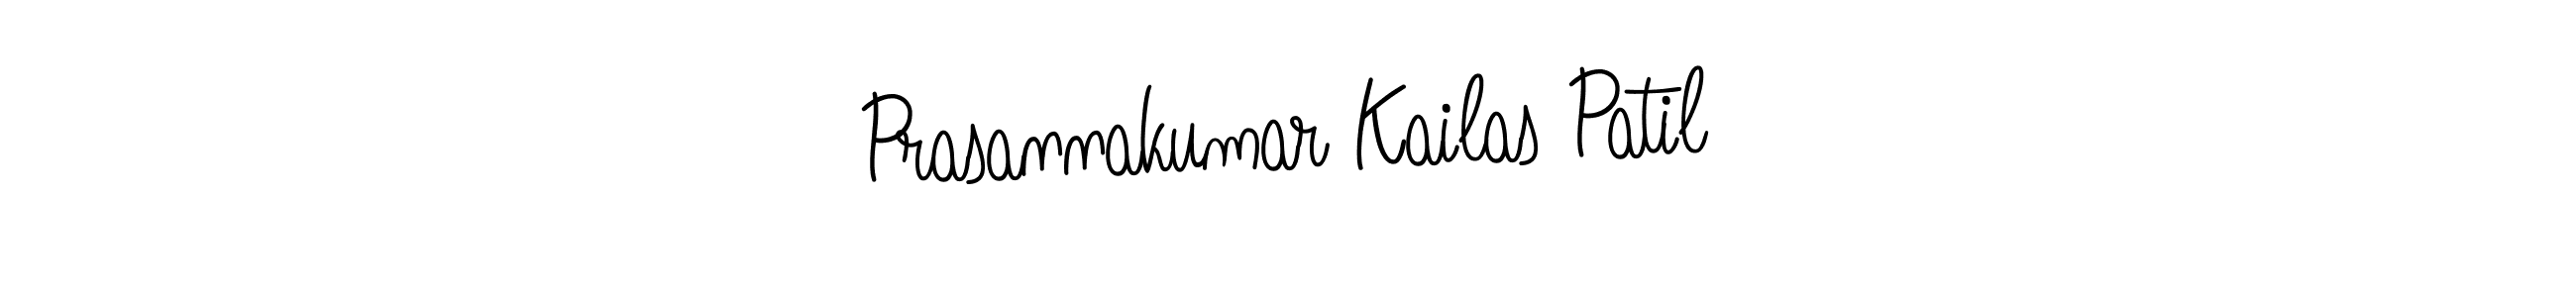 Best and Professional Signature Style for Prasannakumar Kailas Patil. Angelique-Rose-font-FFP Best Signature Style Collection. Prasannakumar Kailas Patil signature style 5 images and pictures png